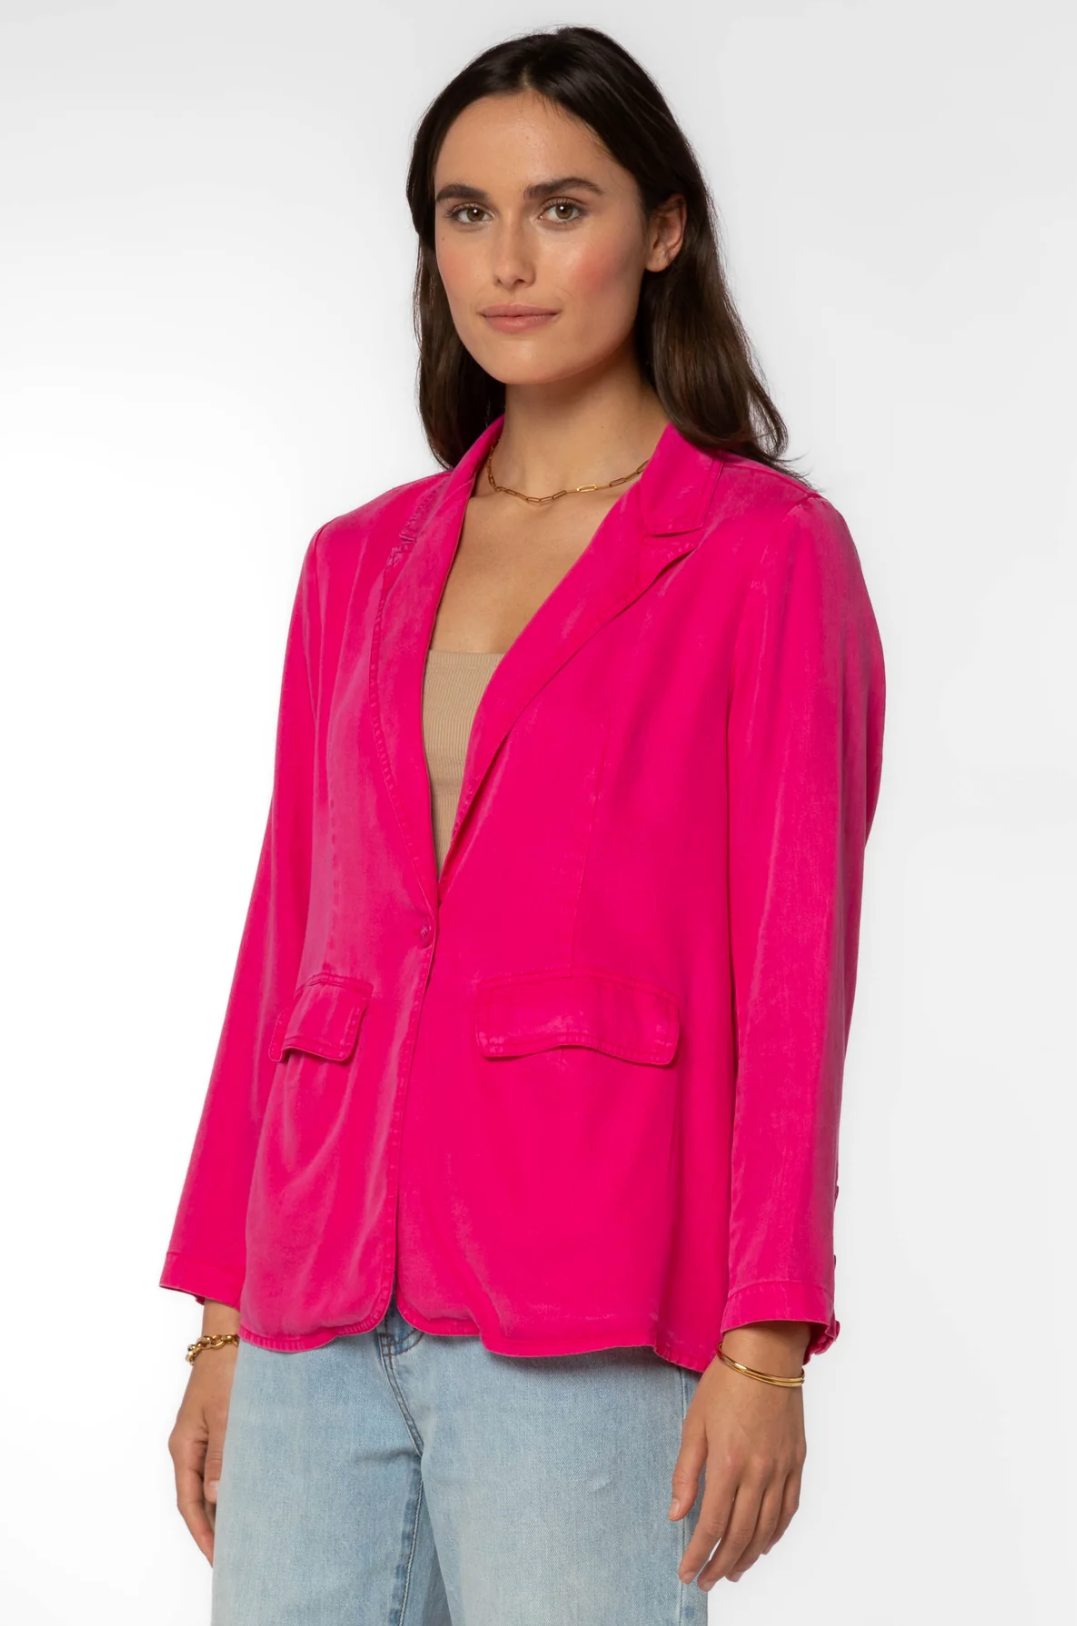 patty tencel blazer in pink, side view